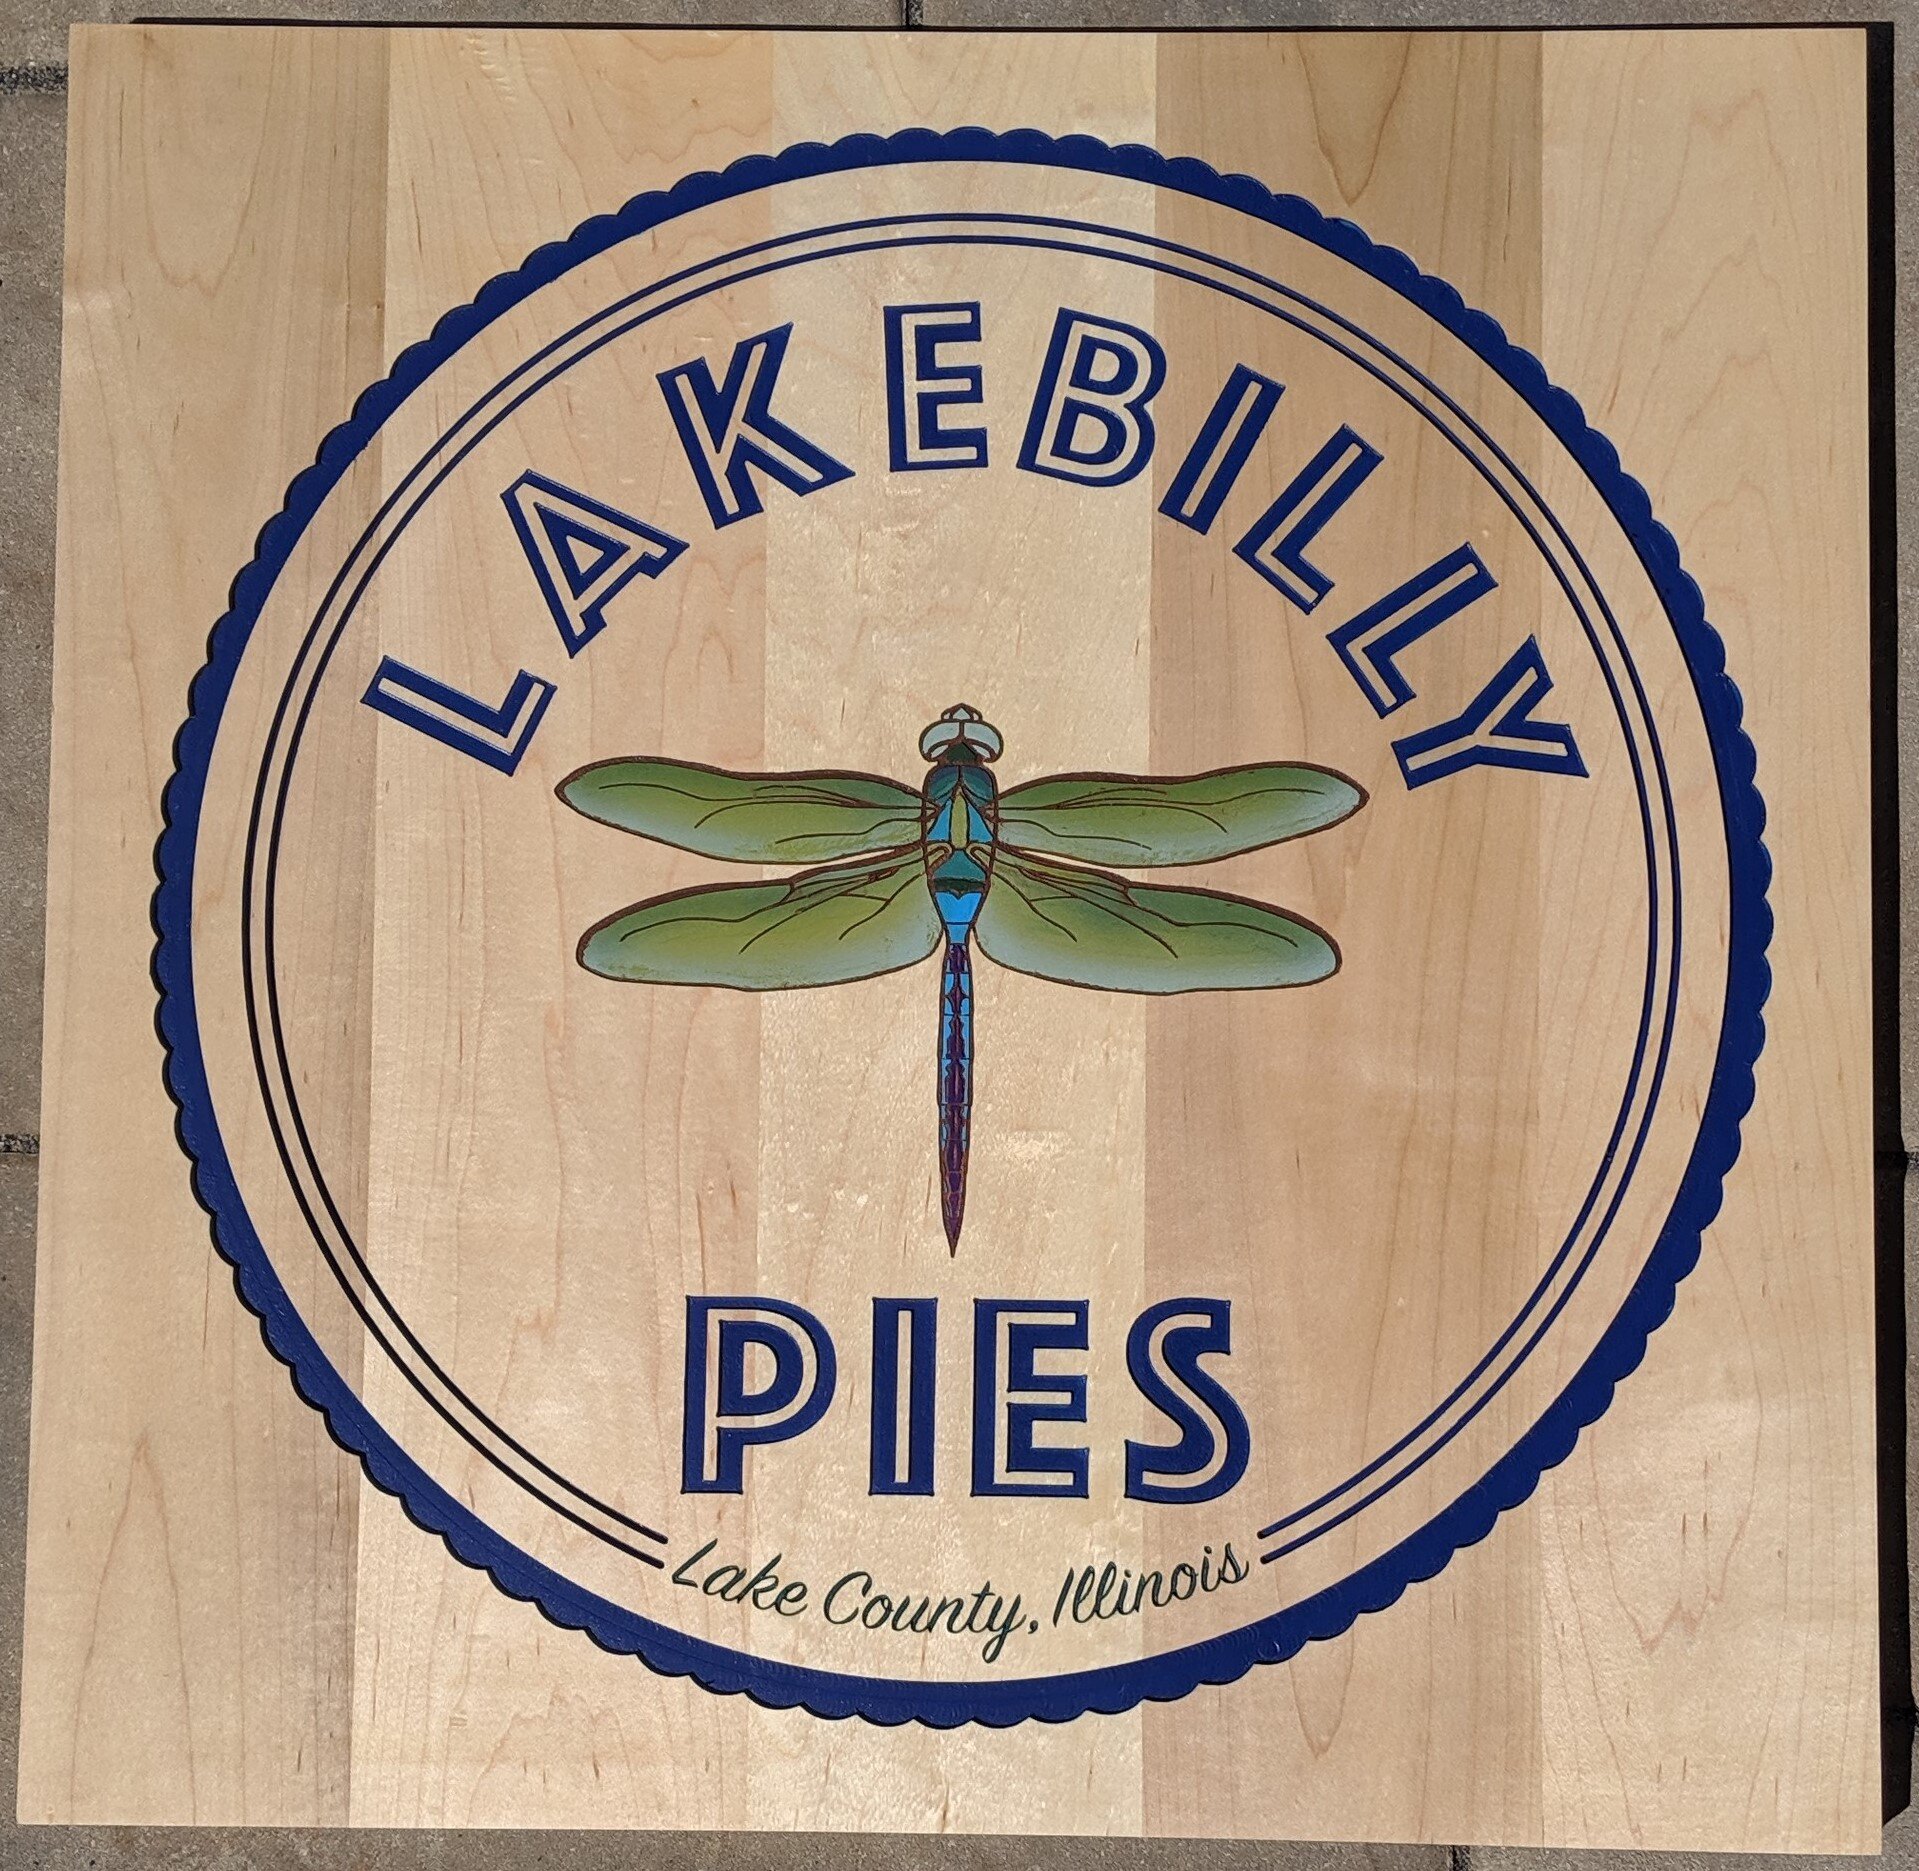 LakeBilly Pie.jpg